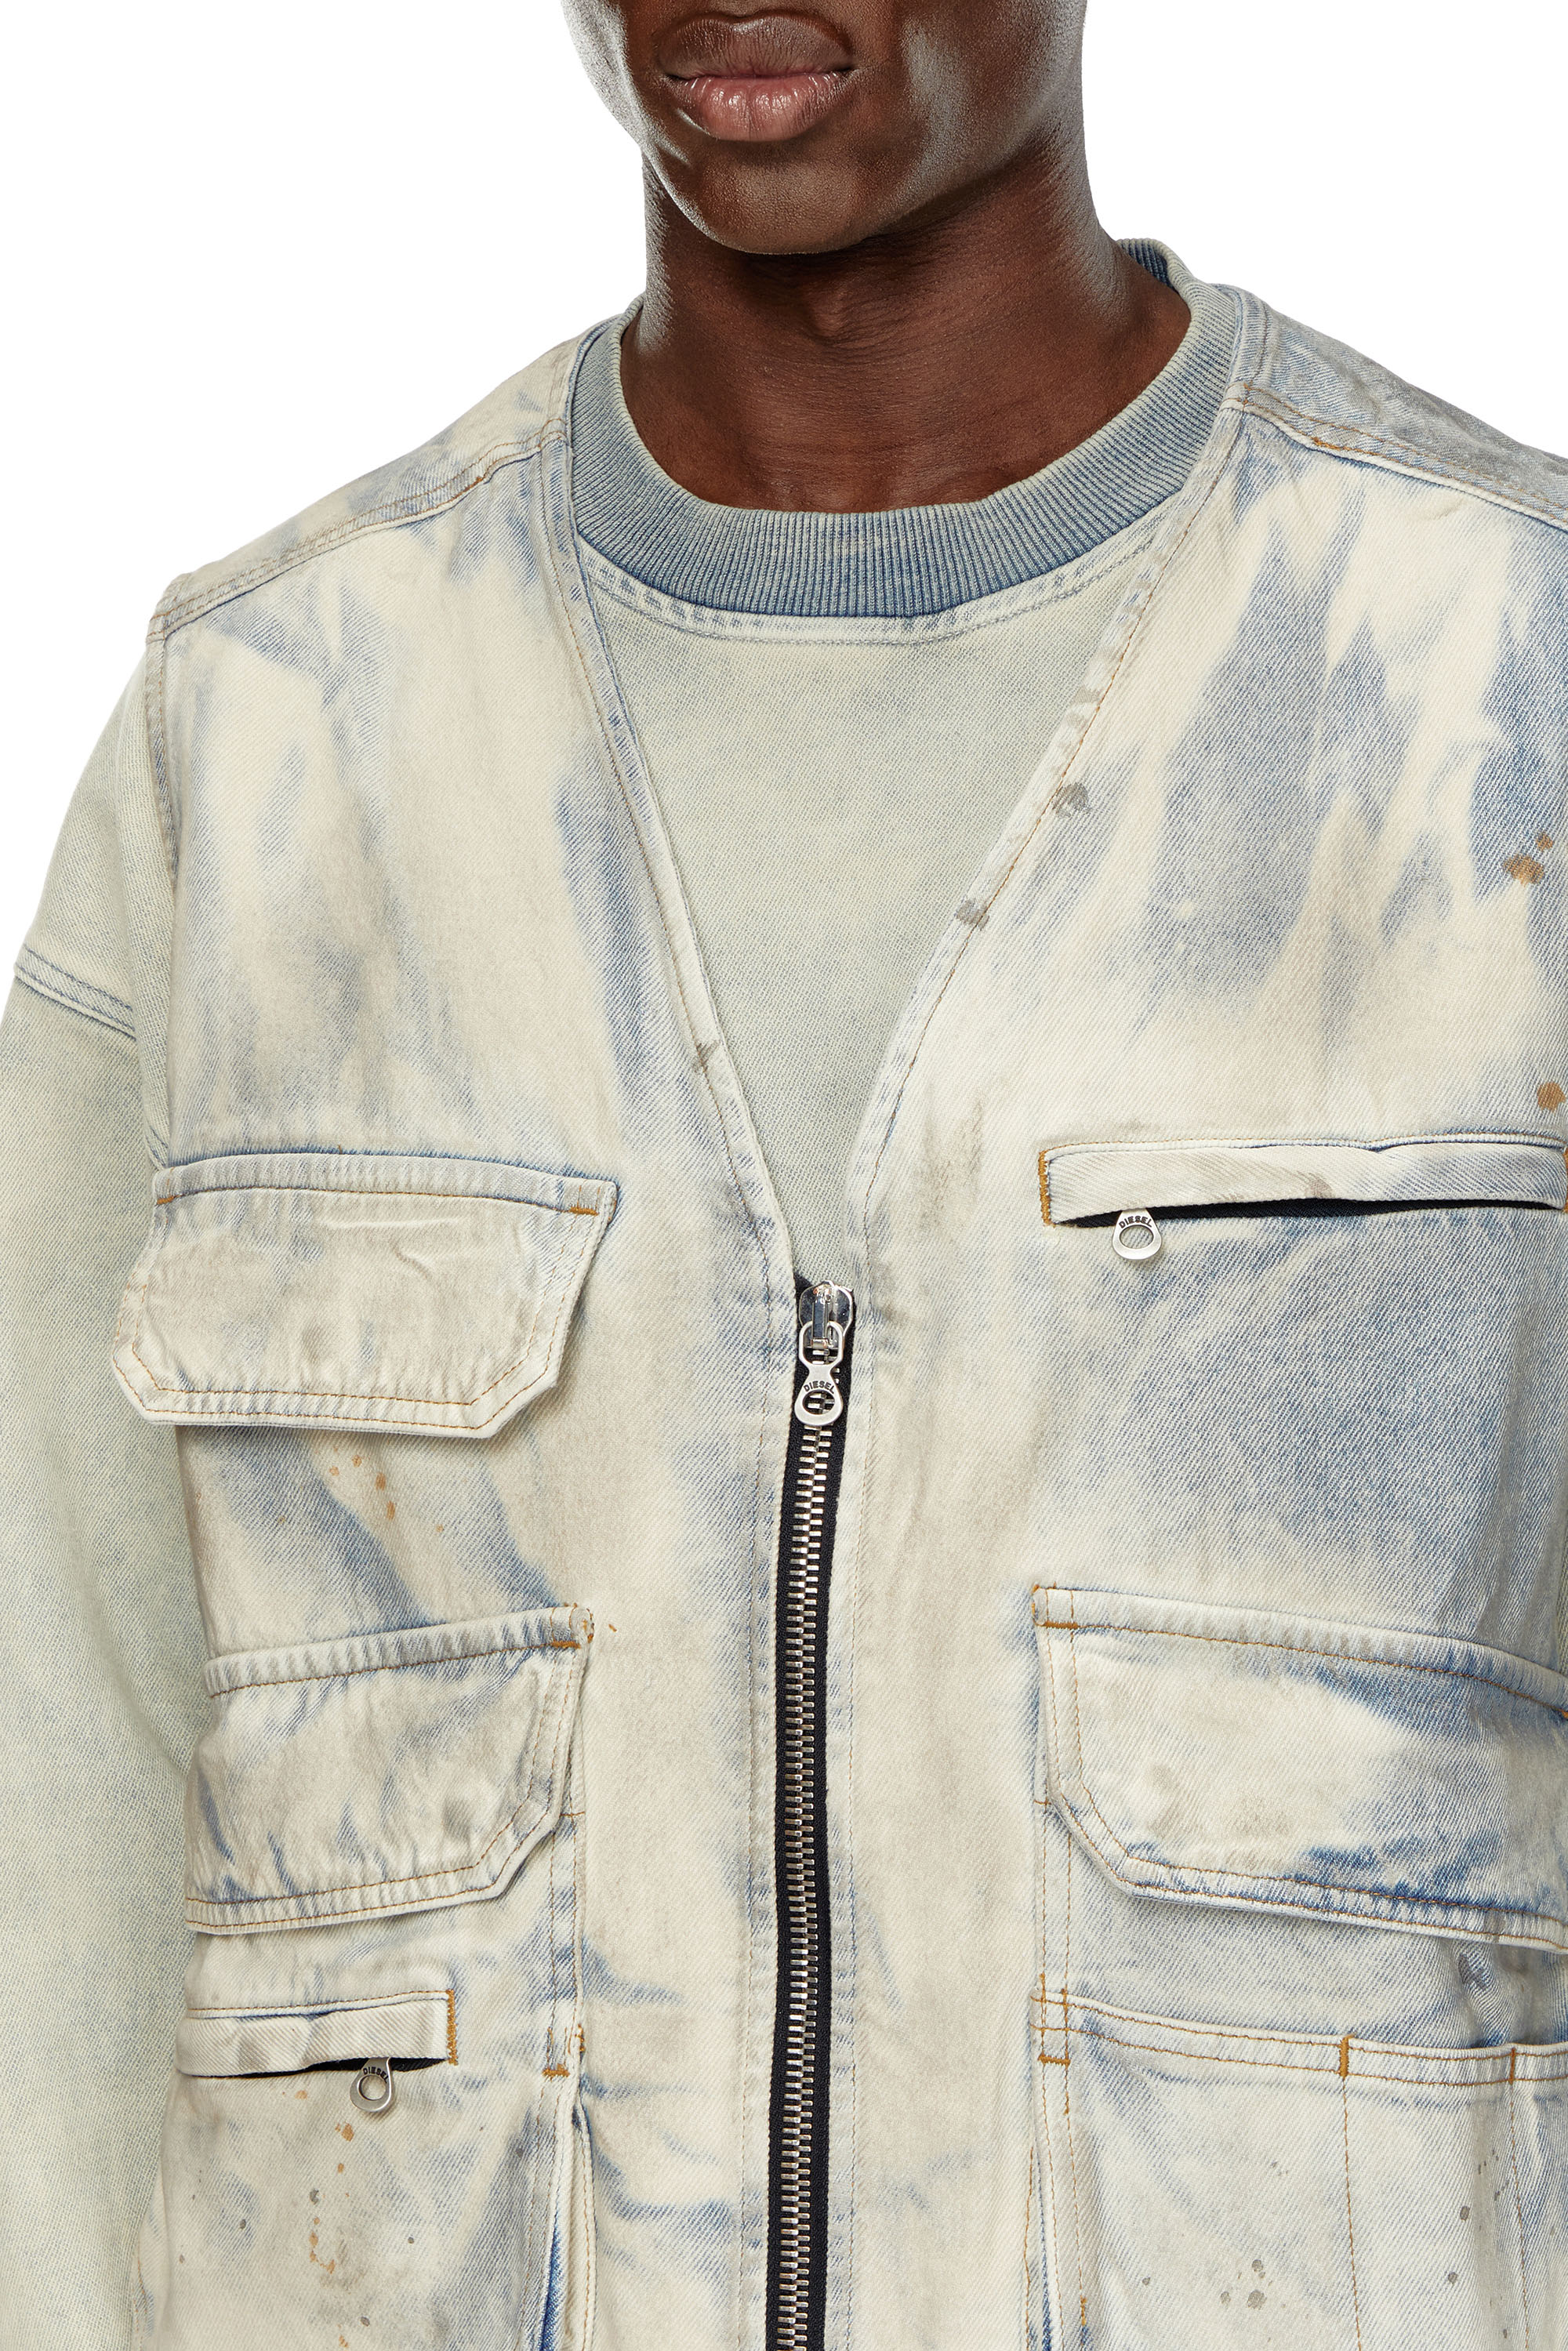 Diesel - D-SAMP-S, Male Sleeveless jacket in solarised denim in マルチカラー - Image 5